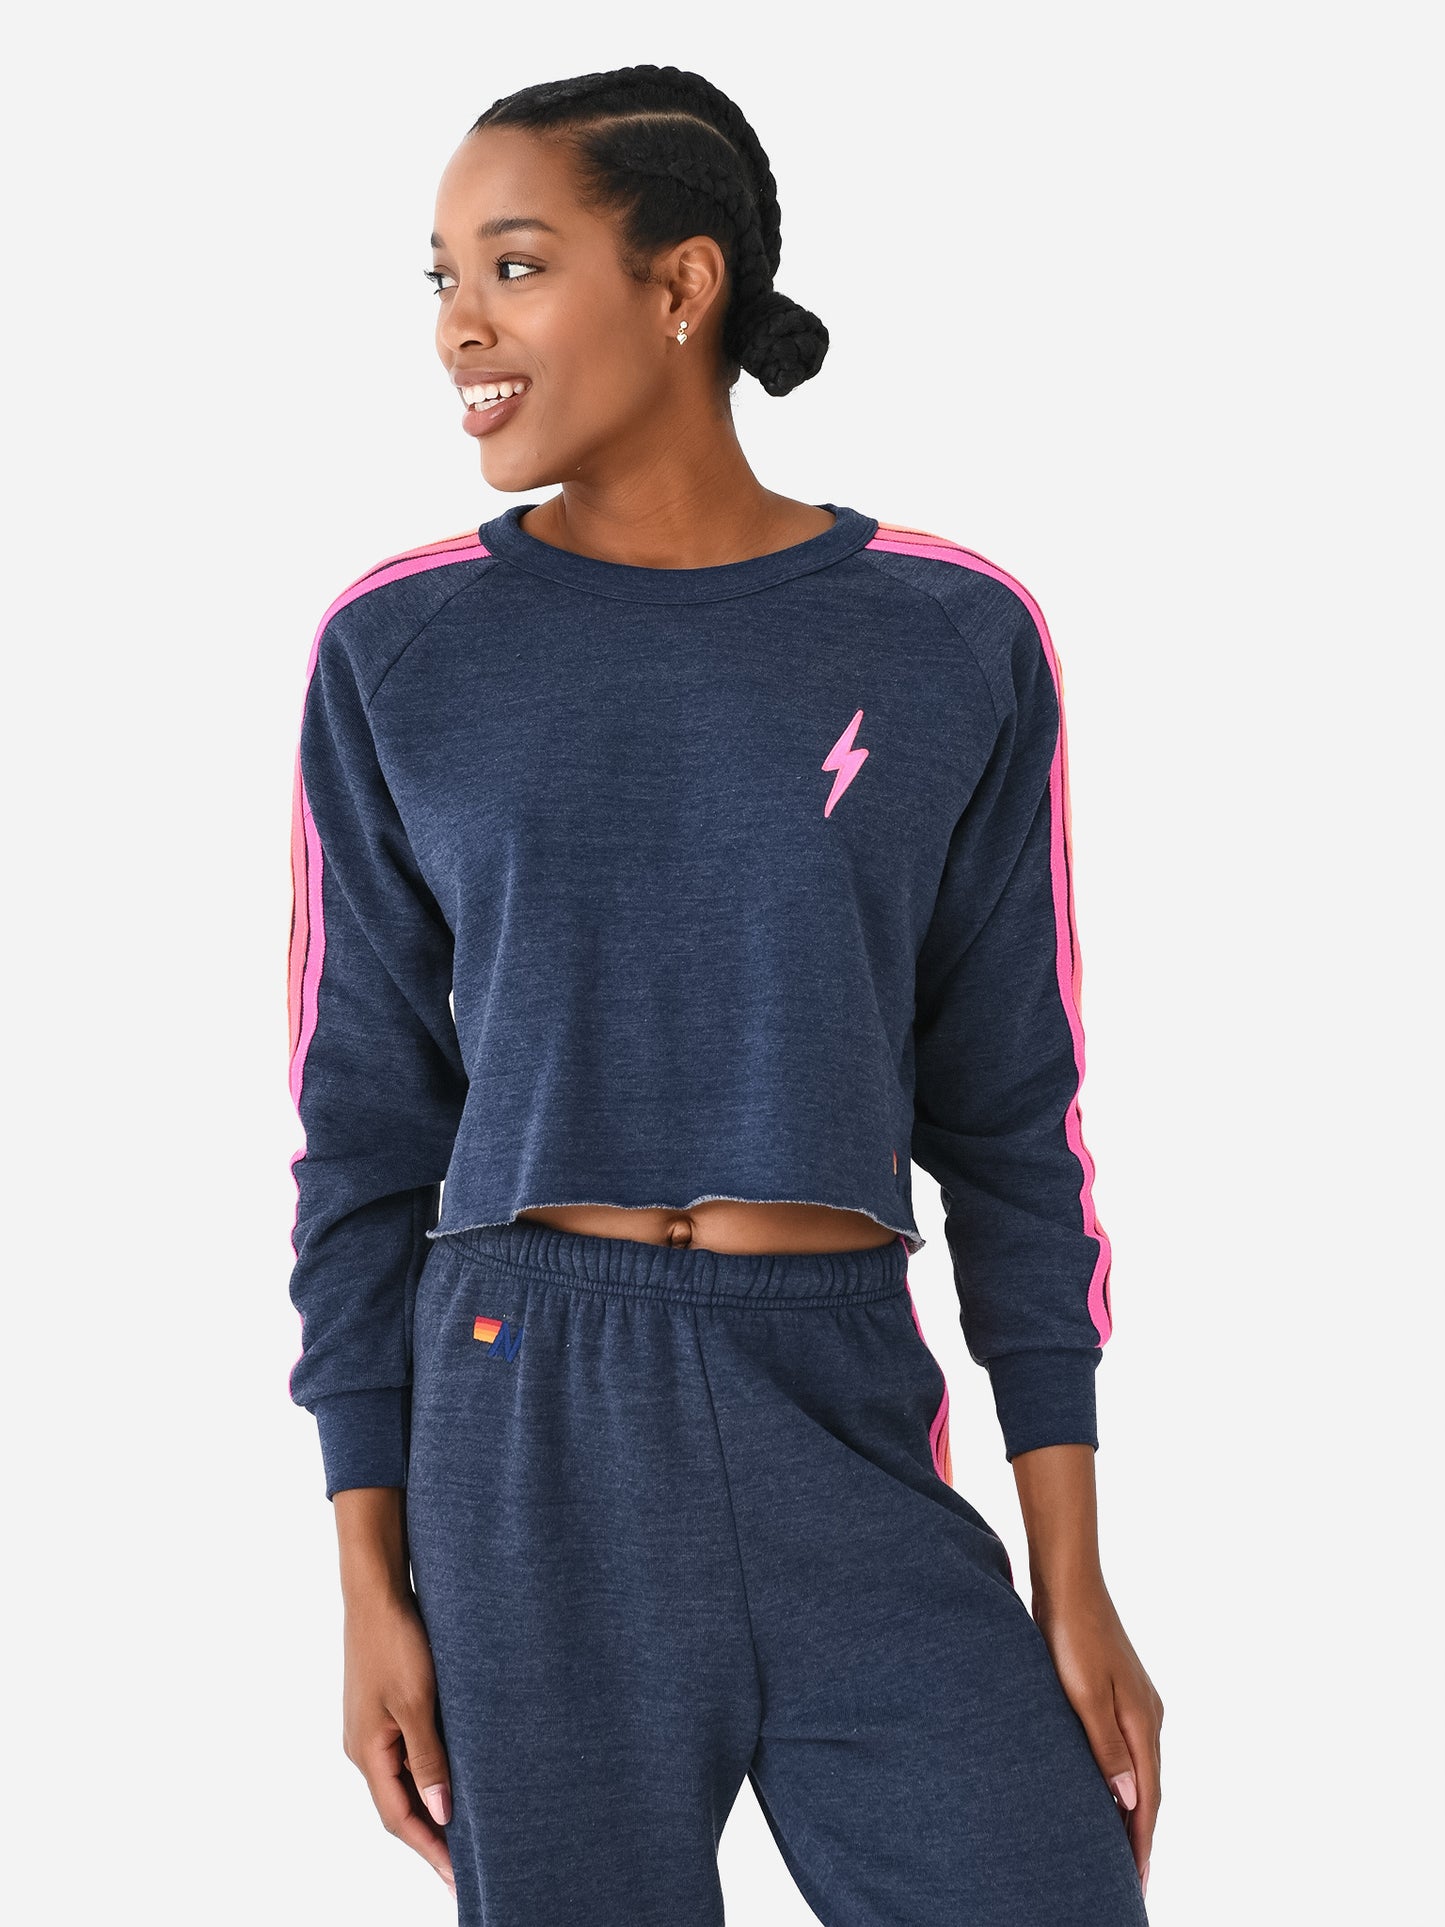 Aviator Nation Women's Bolt Embroidery Classic Cropped Crew Sweatshirt